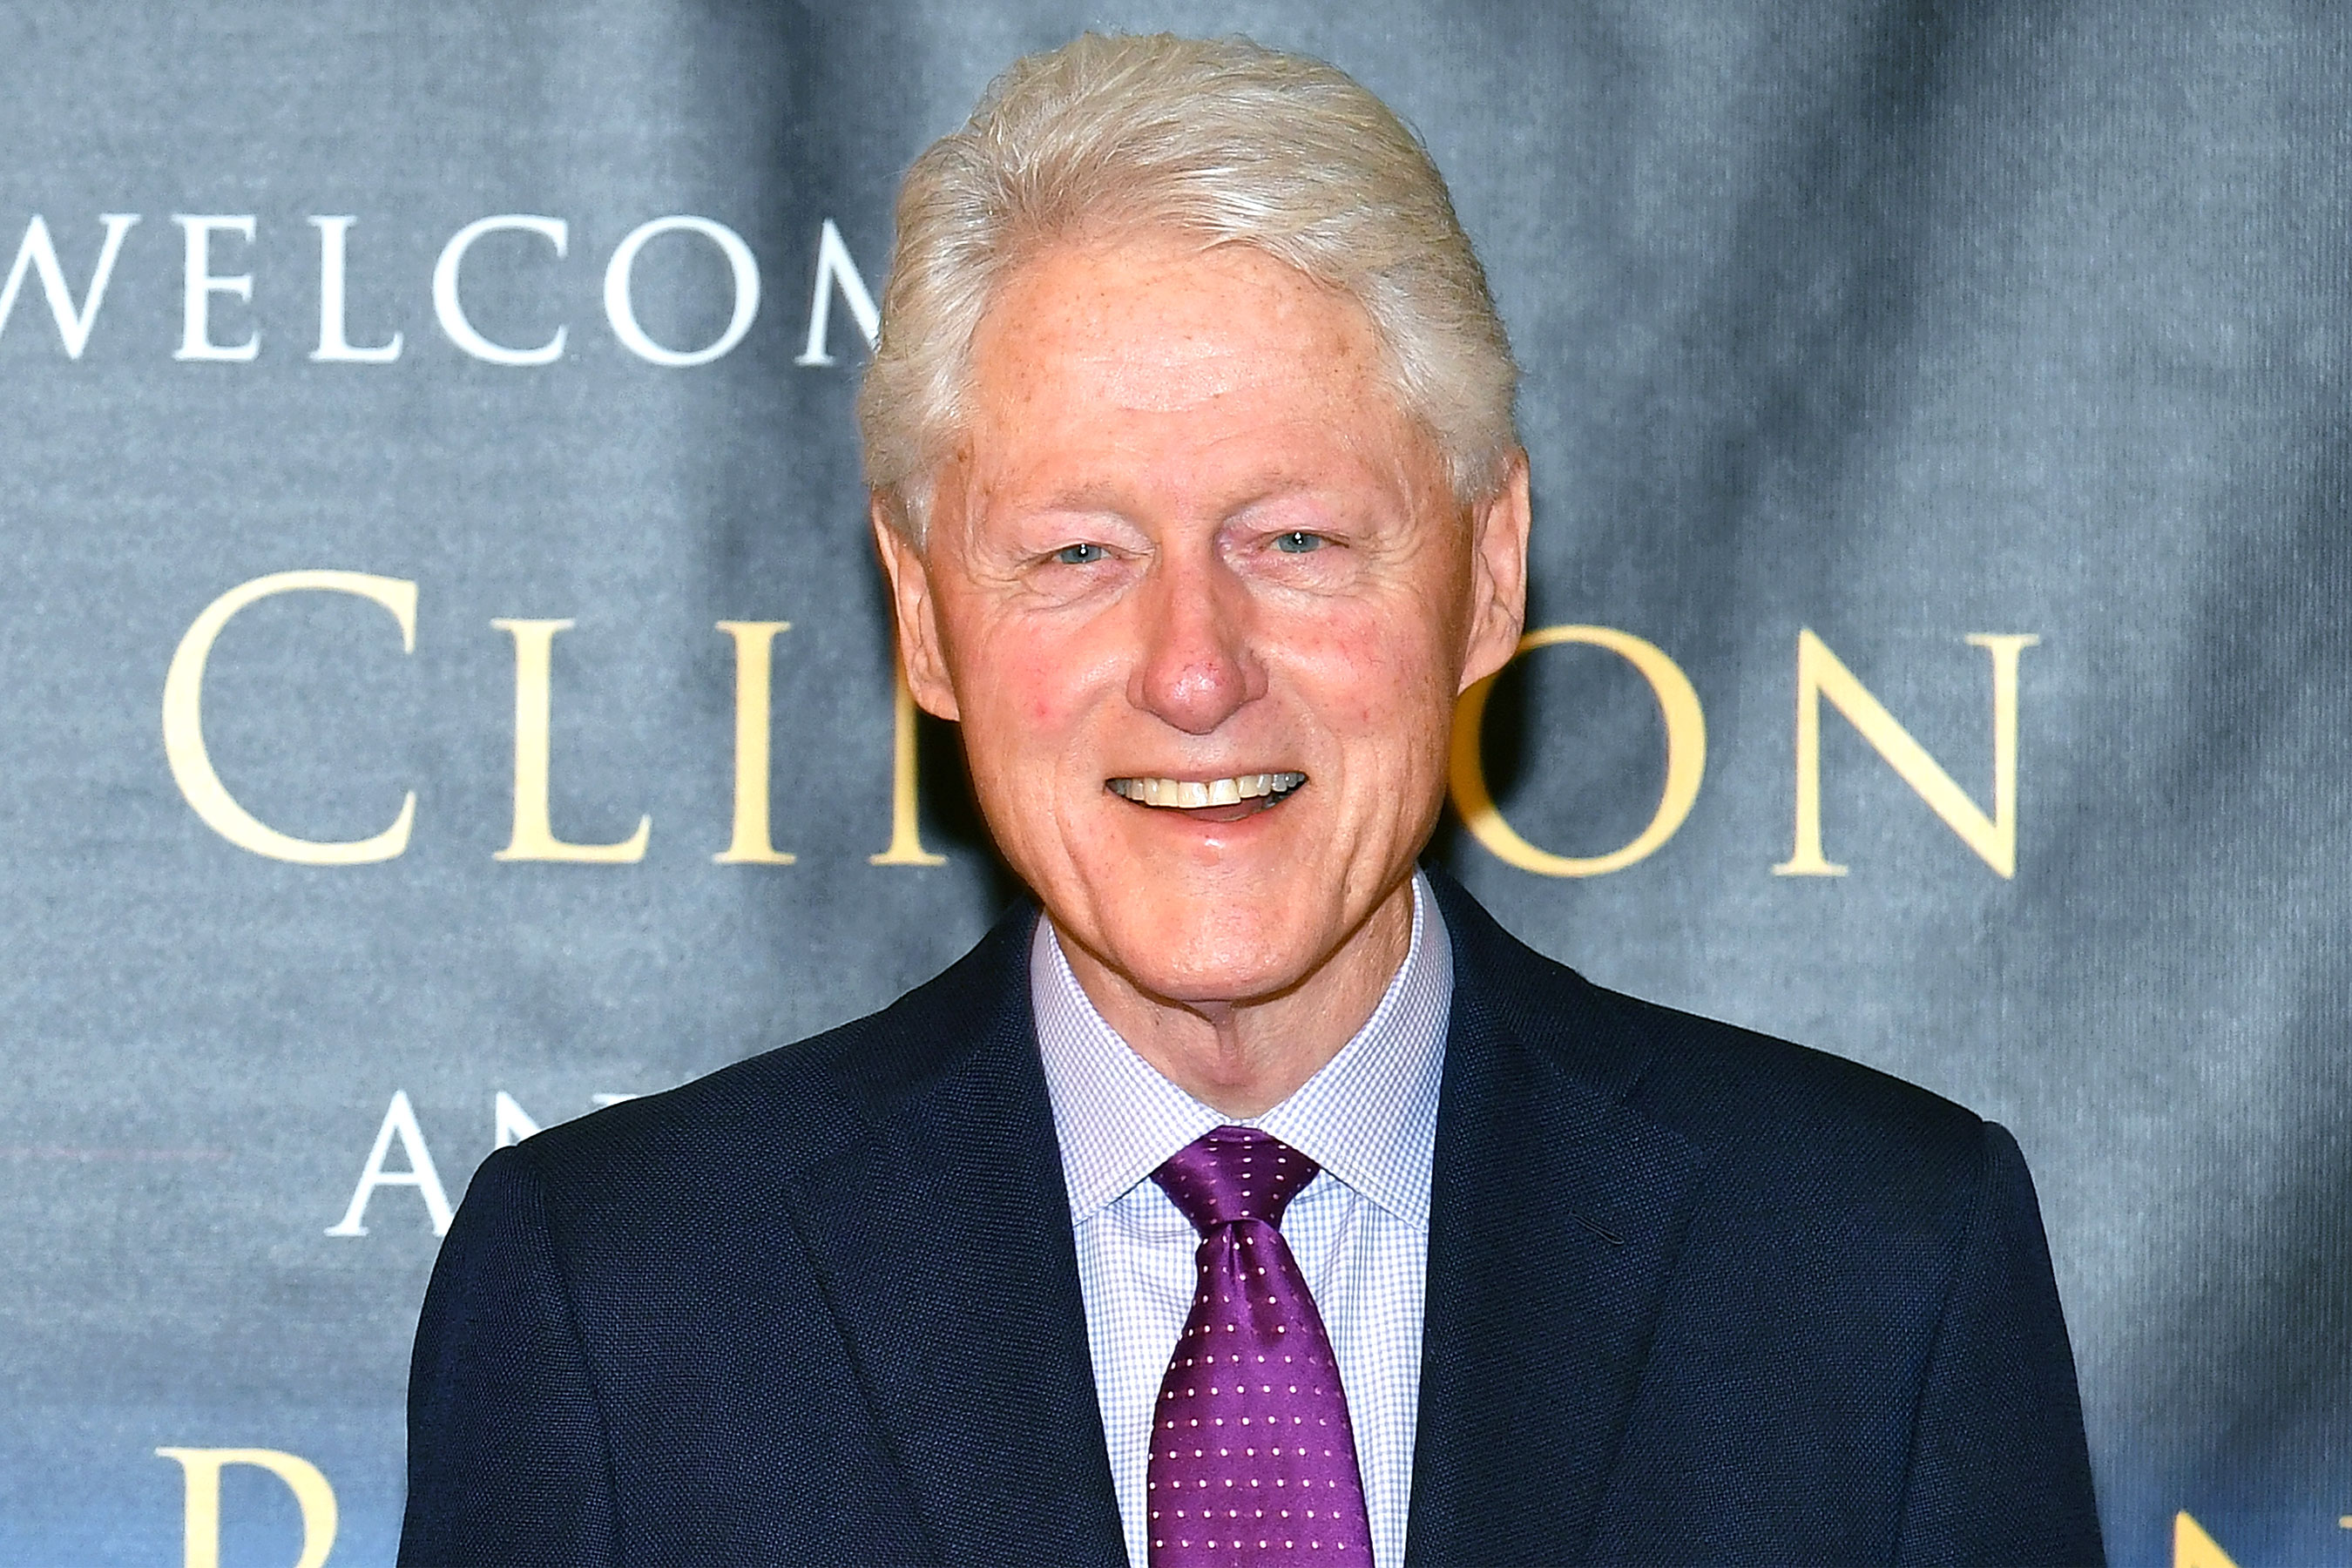 How tall is Bill Clinton?